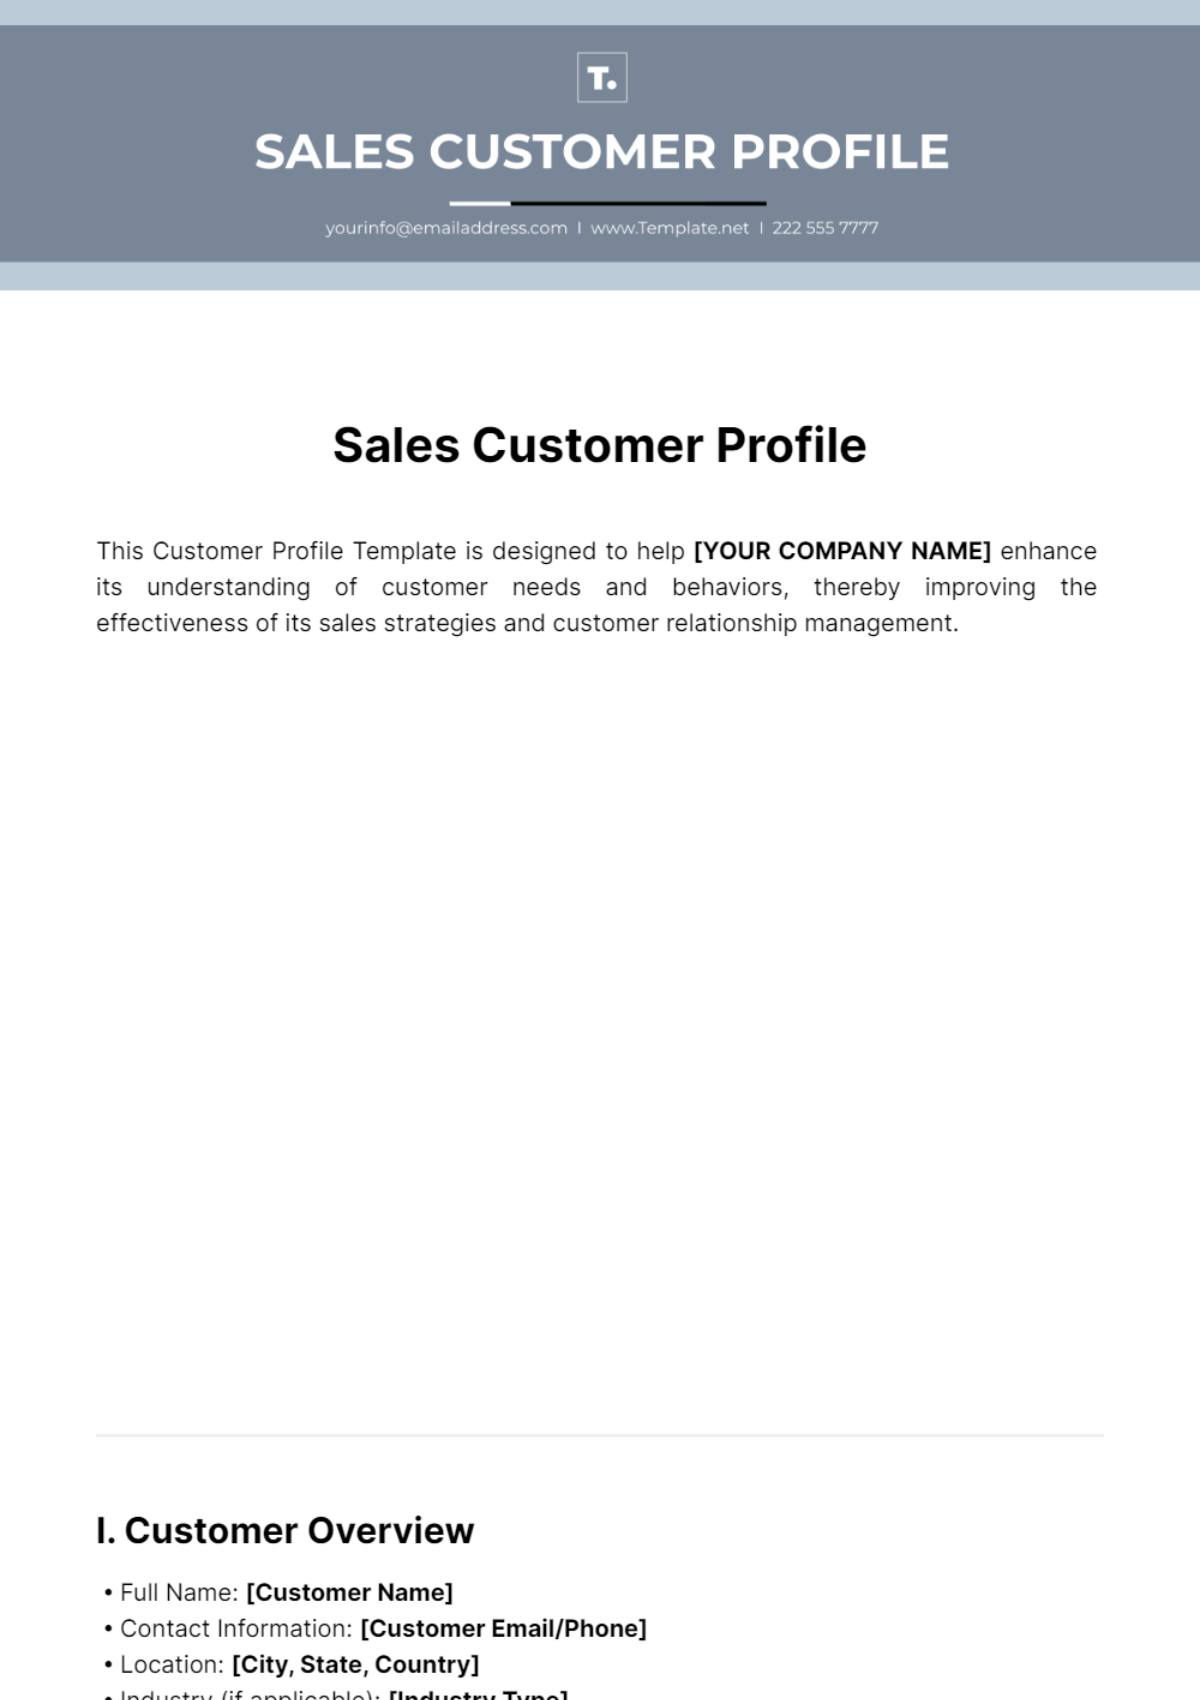 Sales Customer Profile Template